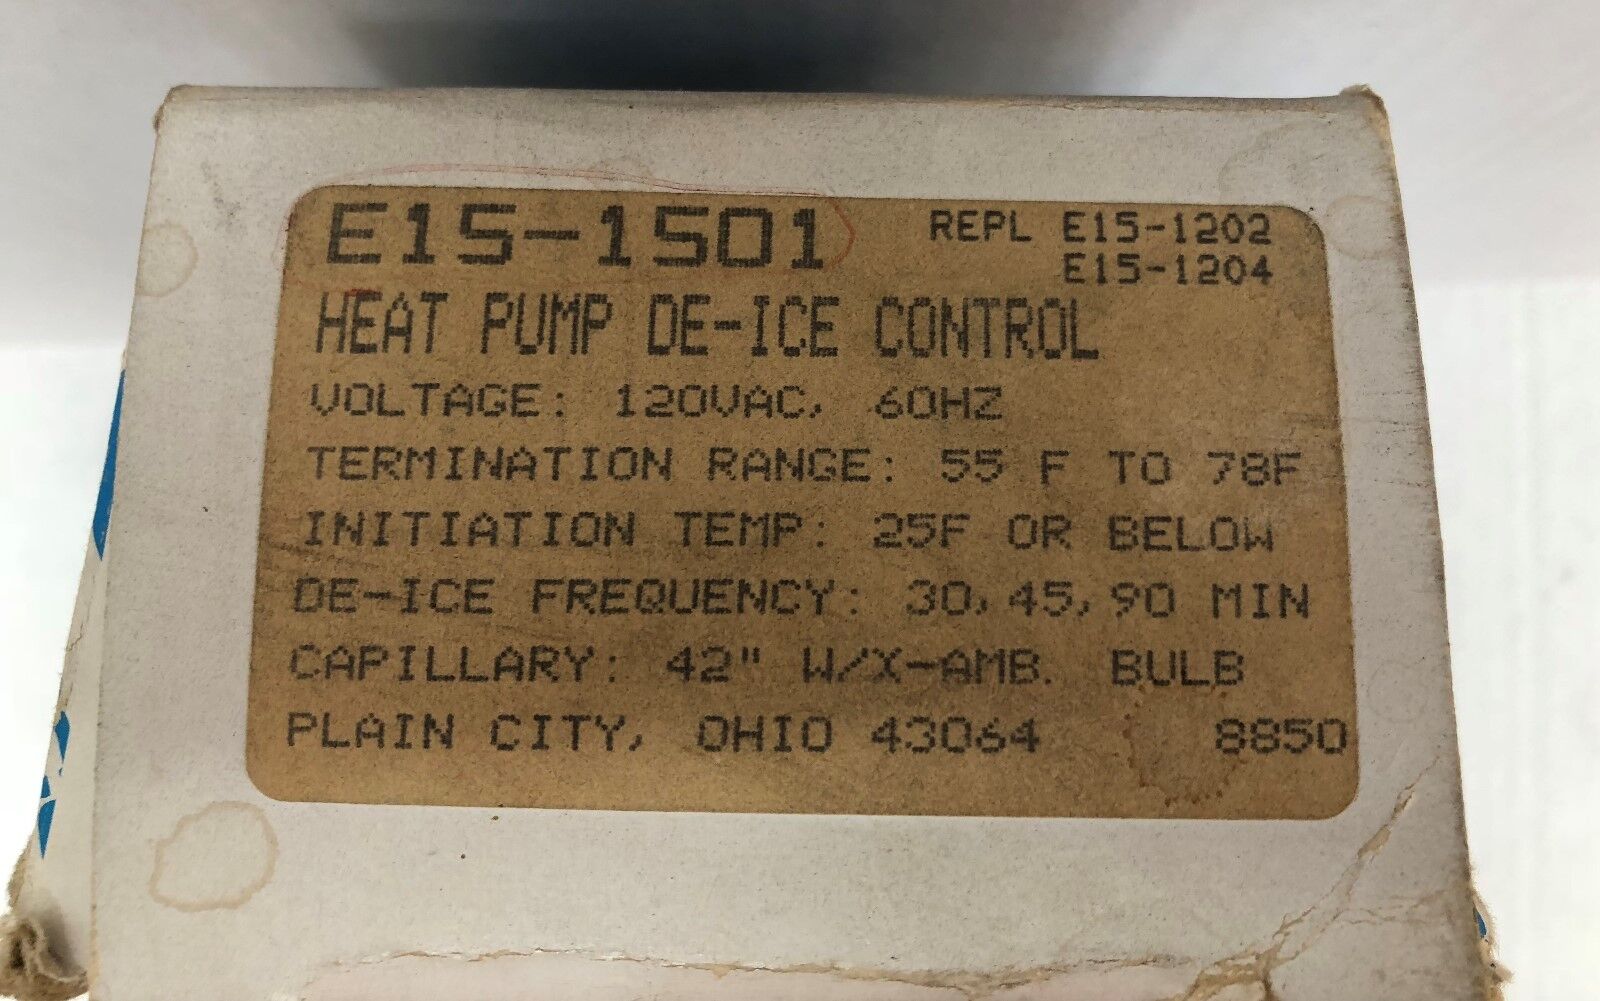 RANCO E15-1501 HEAT PUMP DE-ICE CONTROL